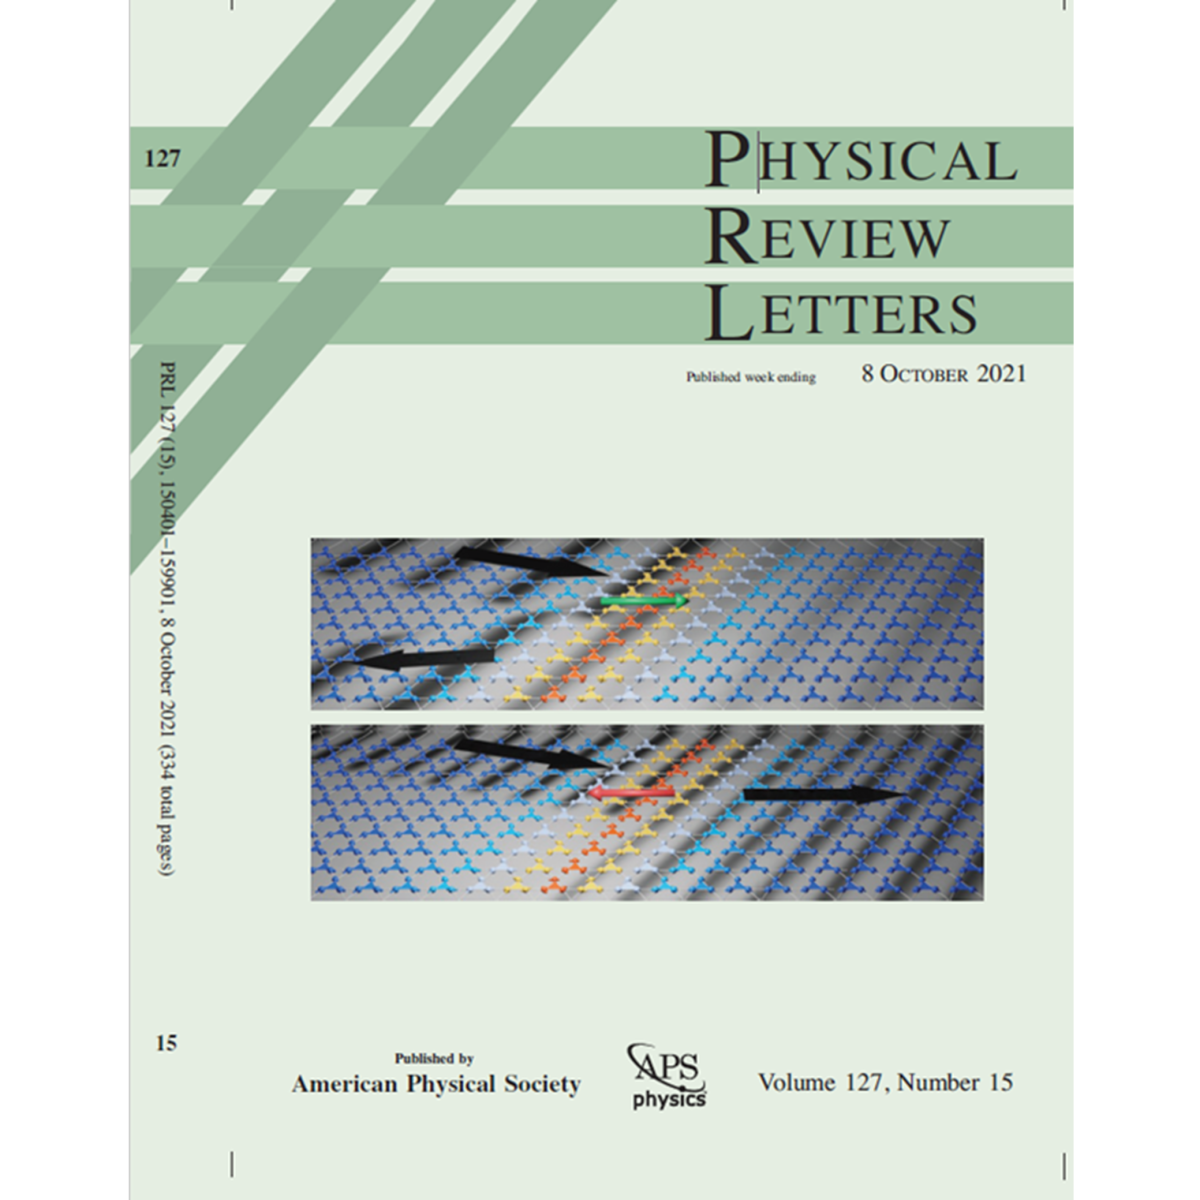 Phys. Rev. Let. 127 front cover figure